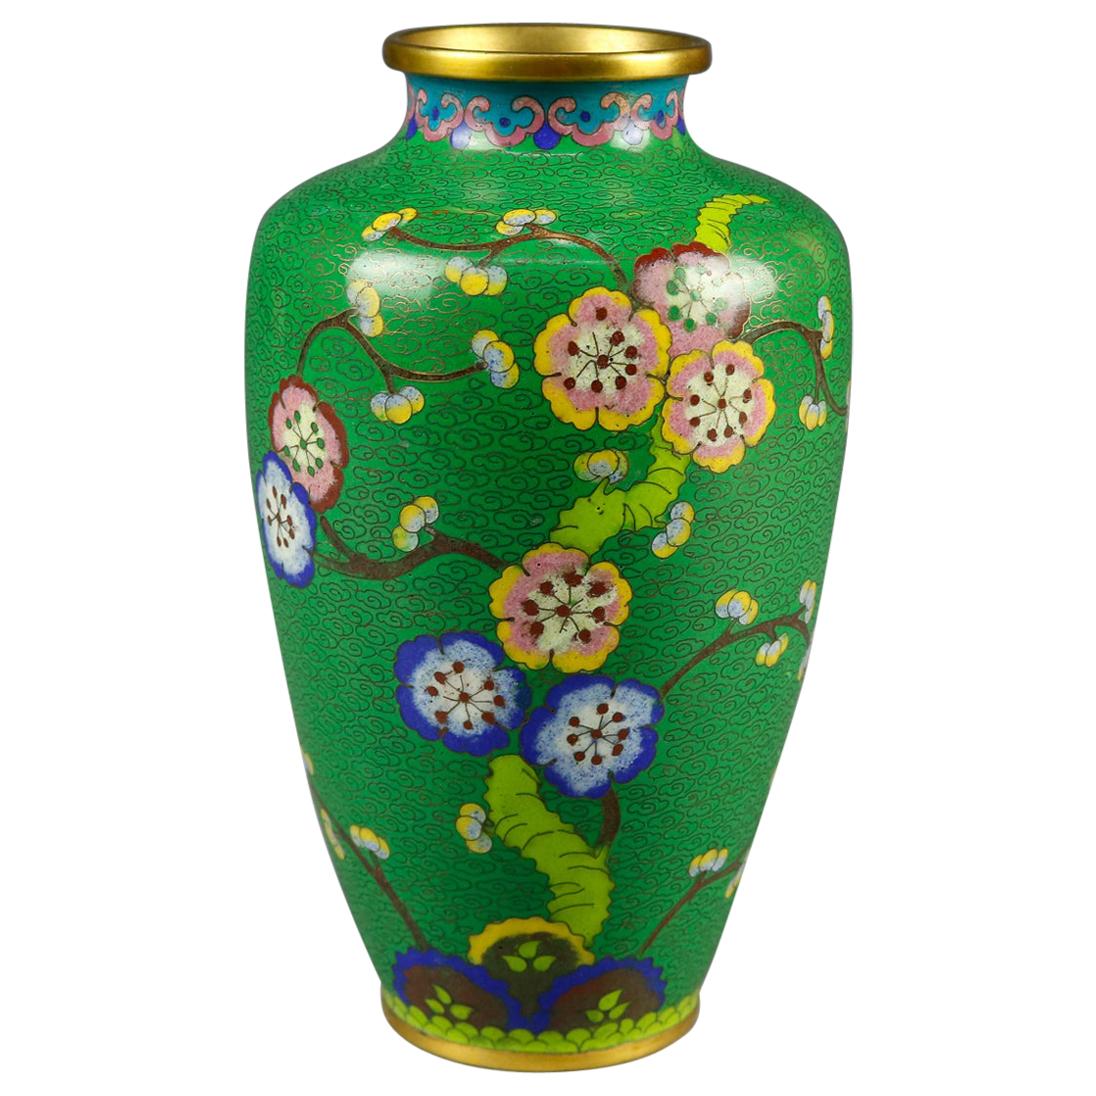 Vintage Chinese Cloisonné Floral Garden Hand Enameled Brass Vase, circa 1930